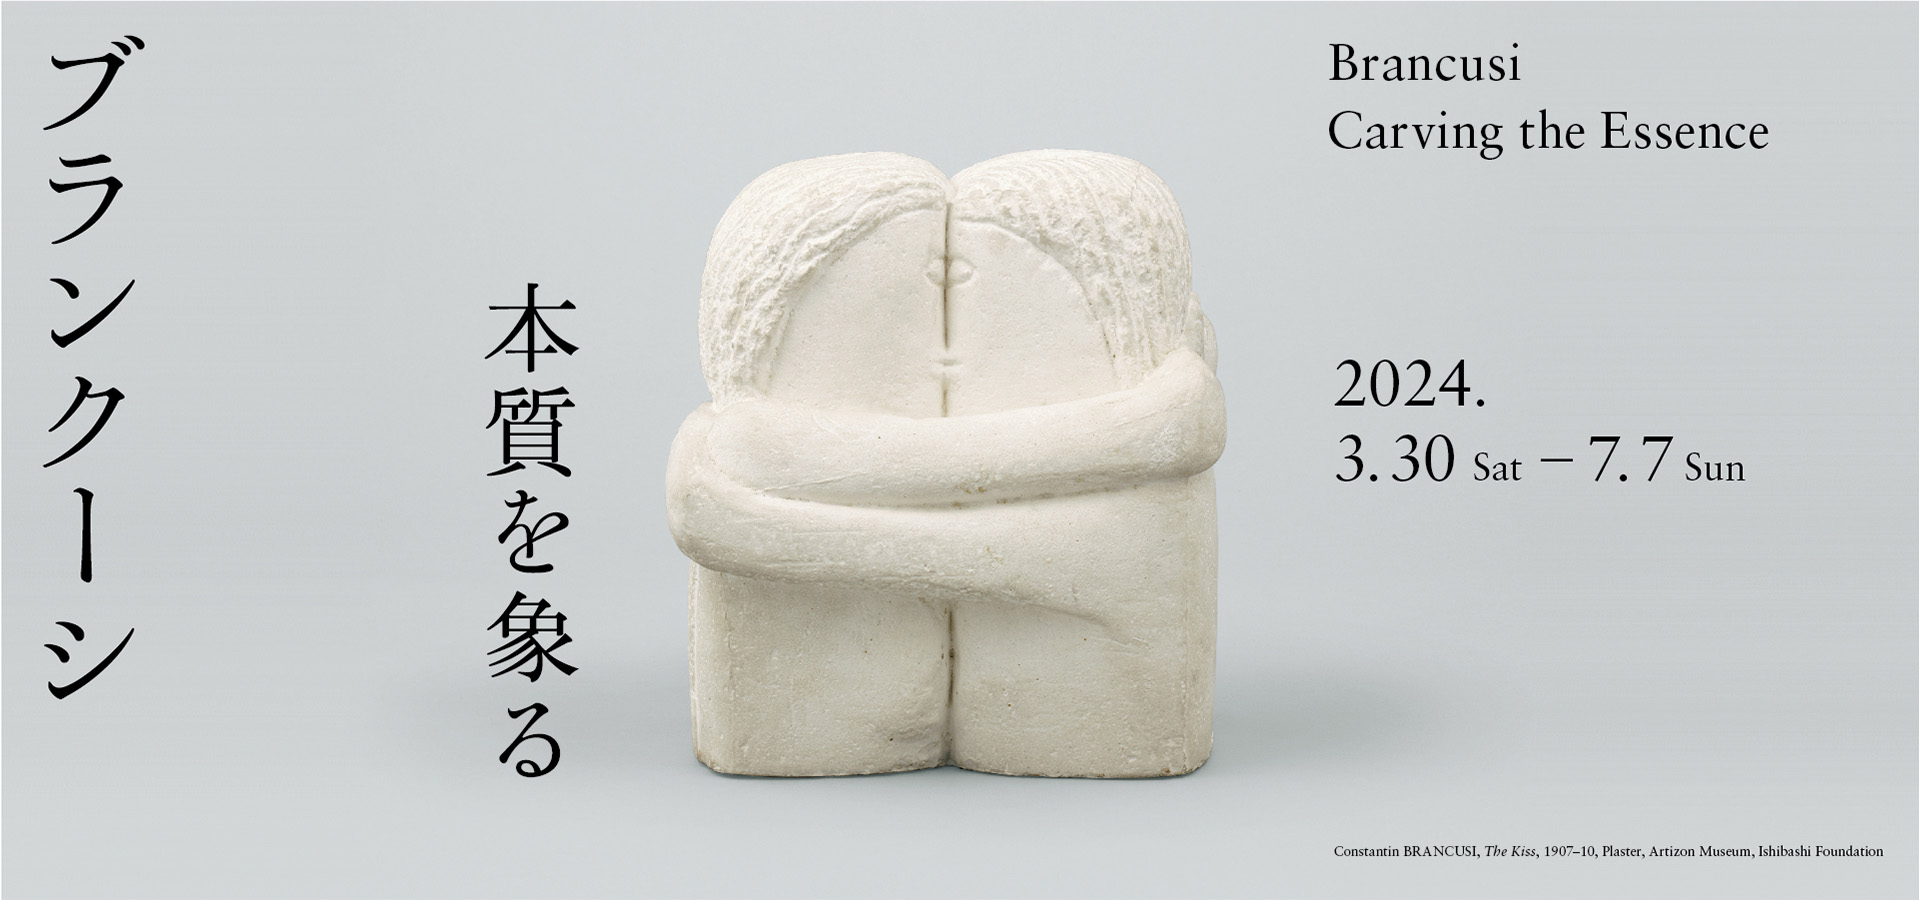 Brancusi: Carving the Essence